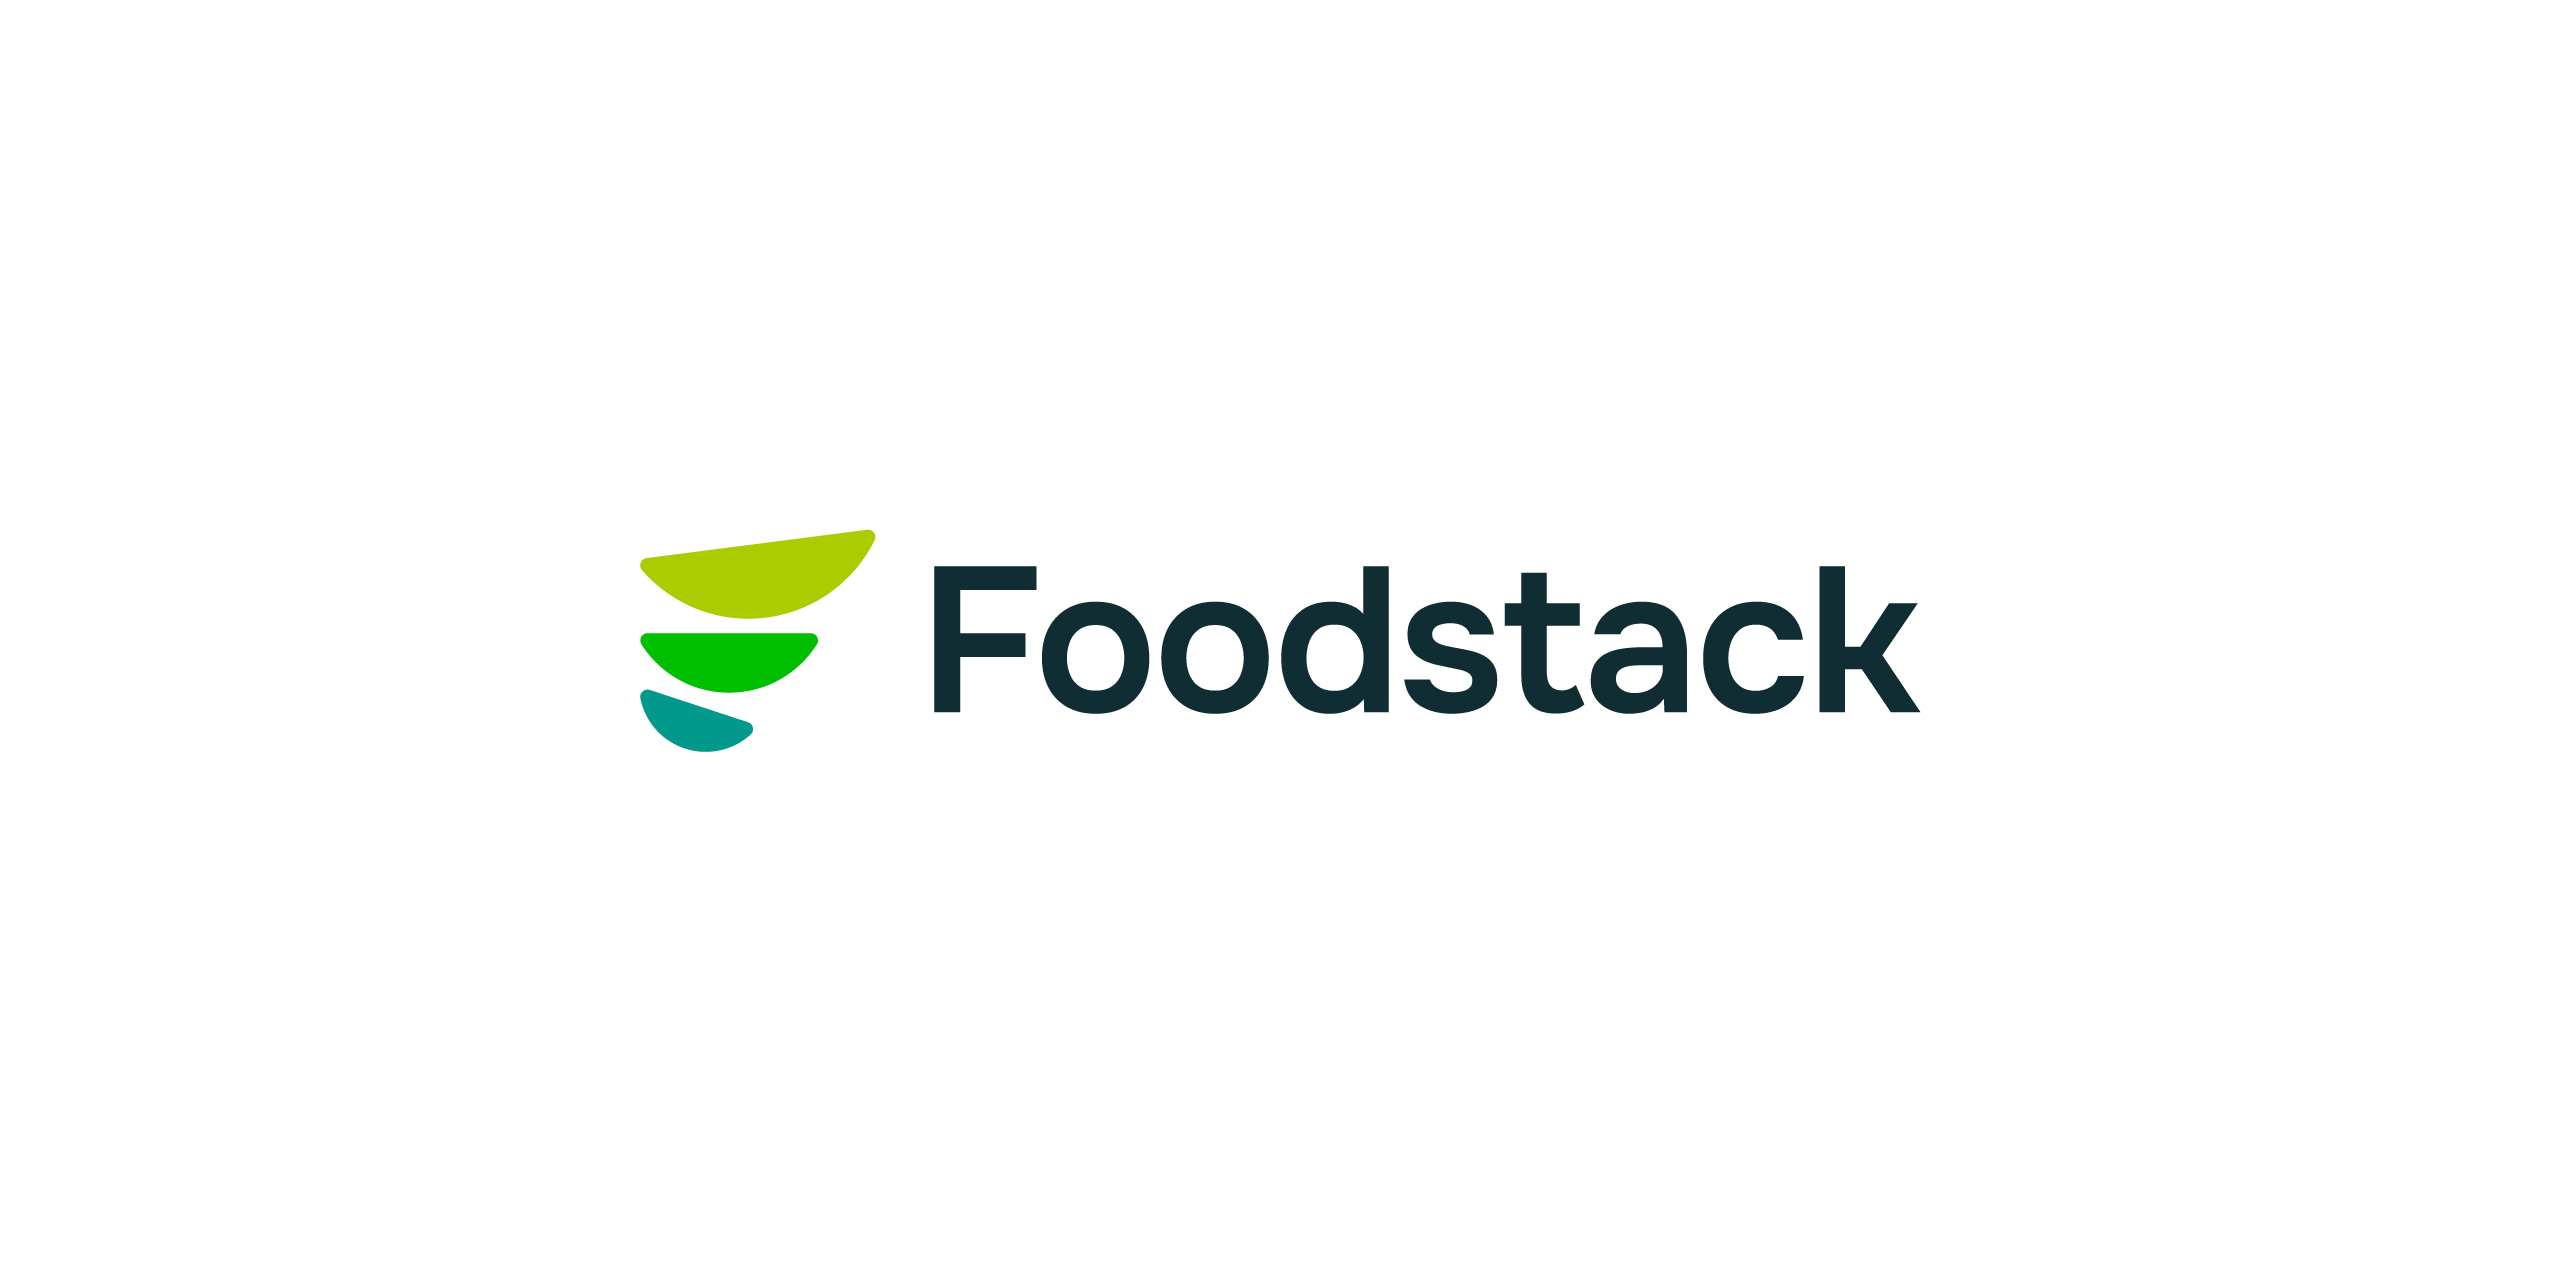 Foodstack logo by Brandforma